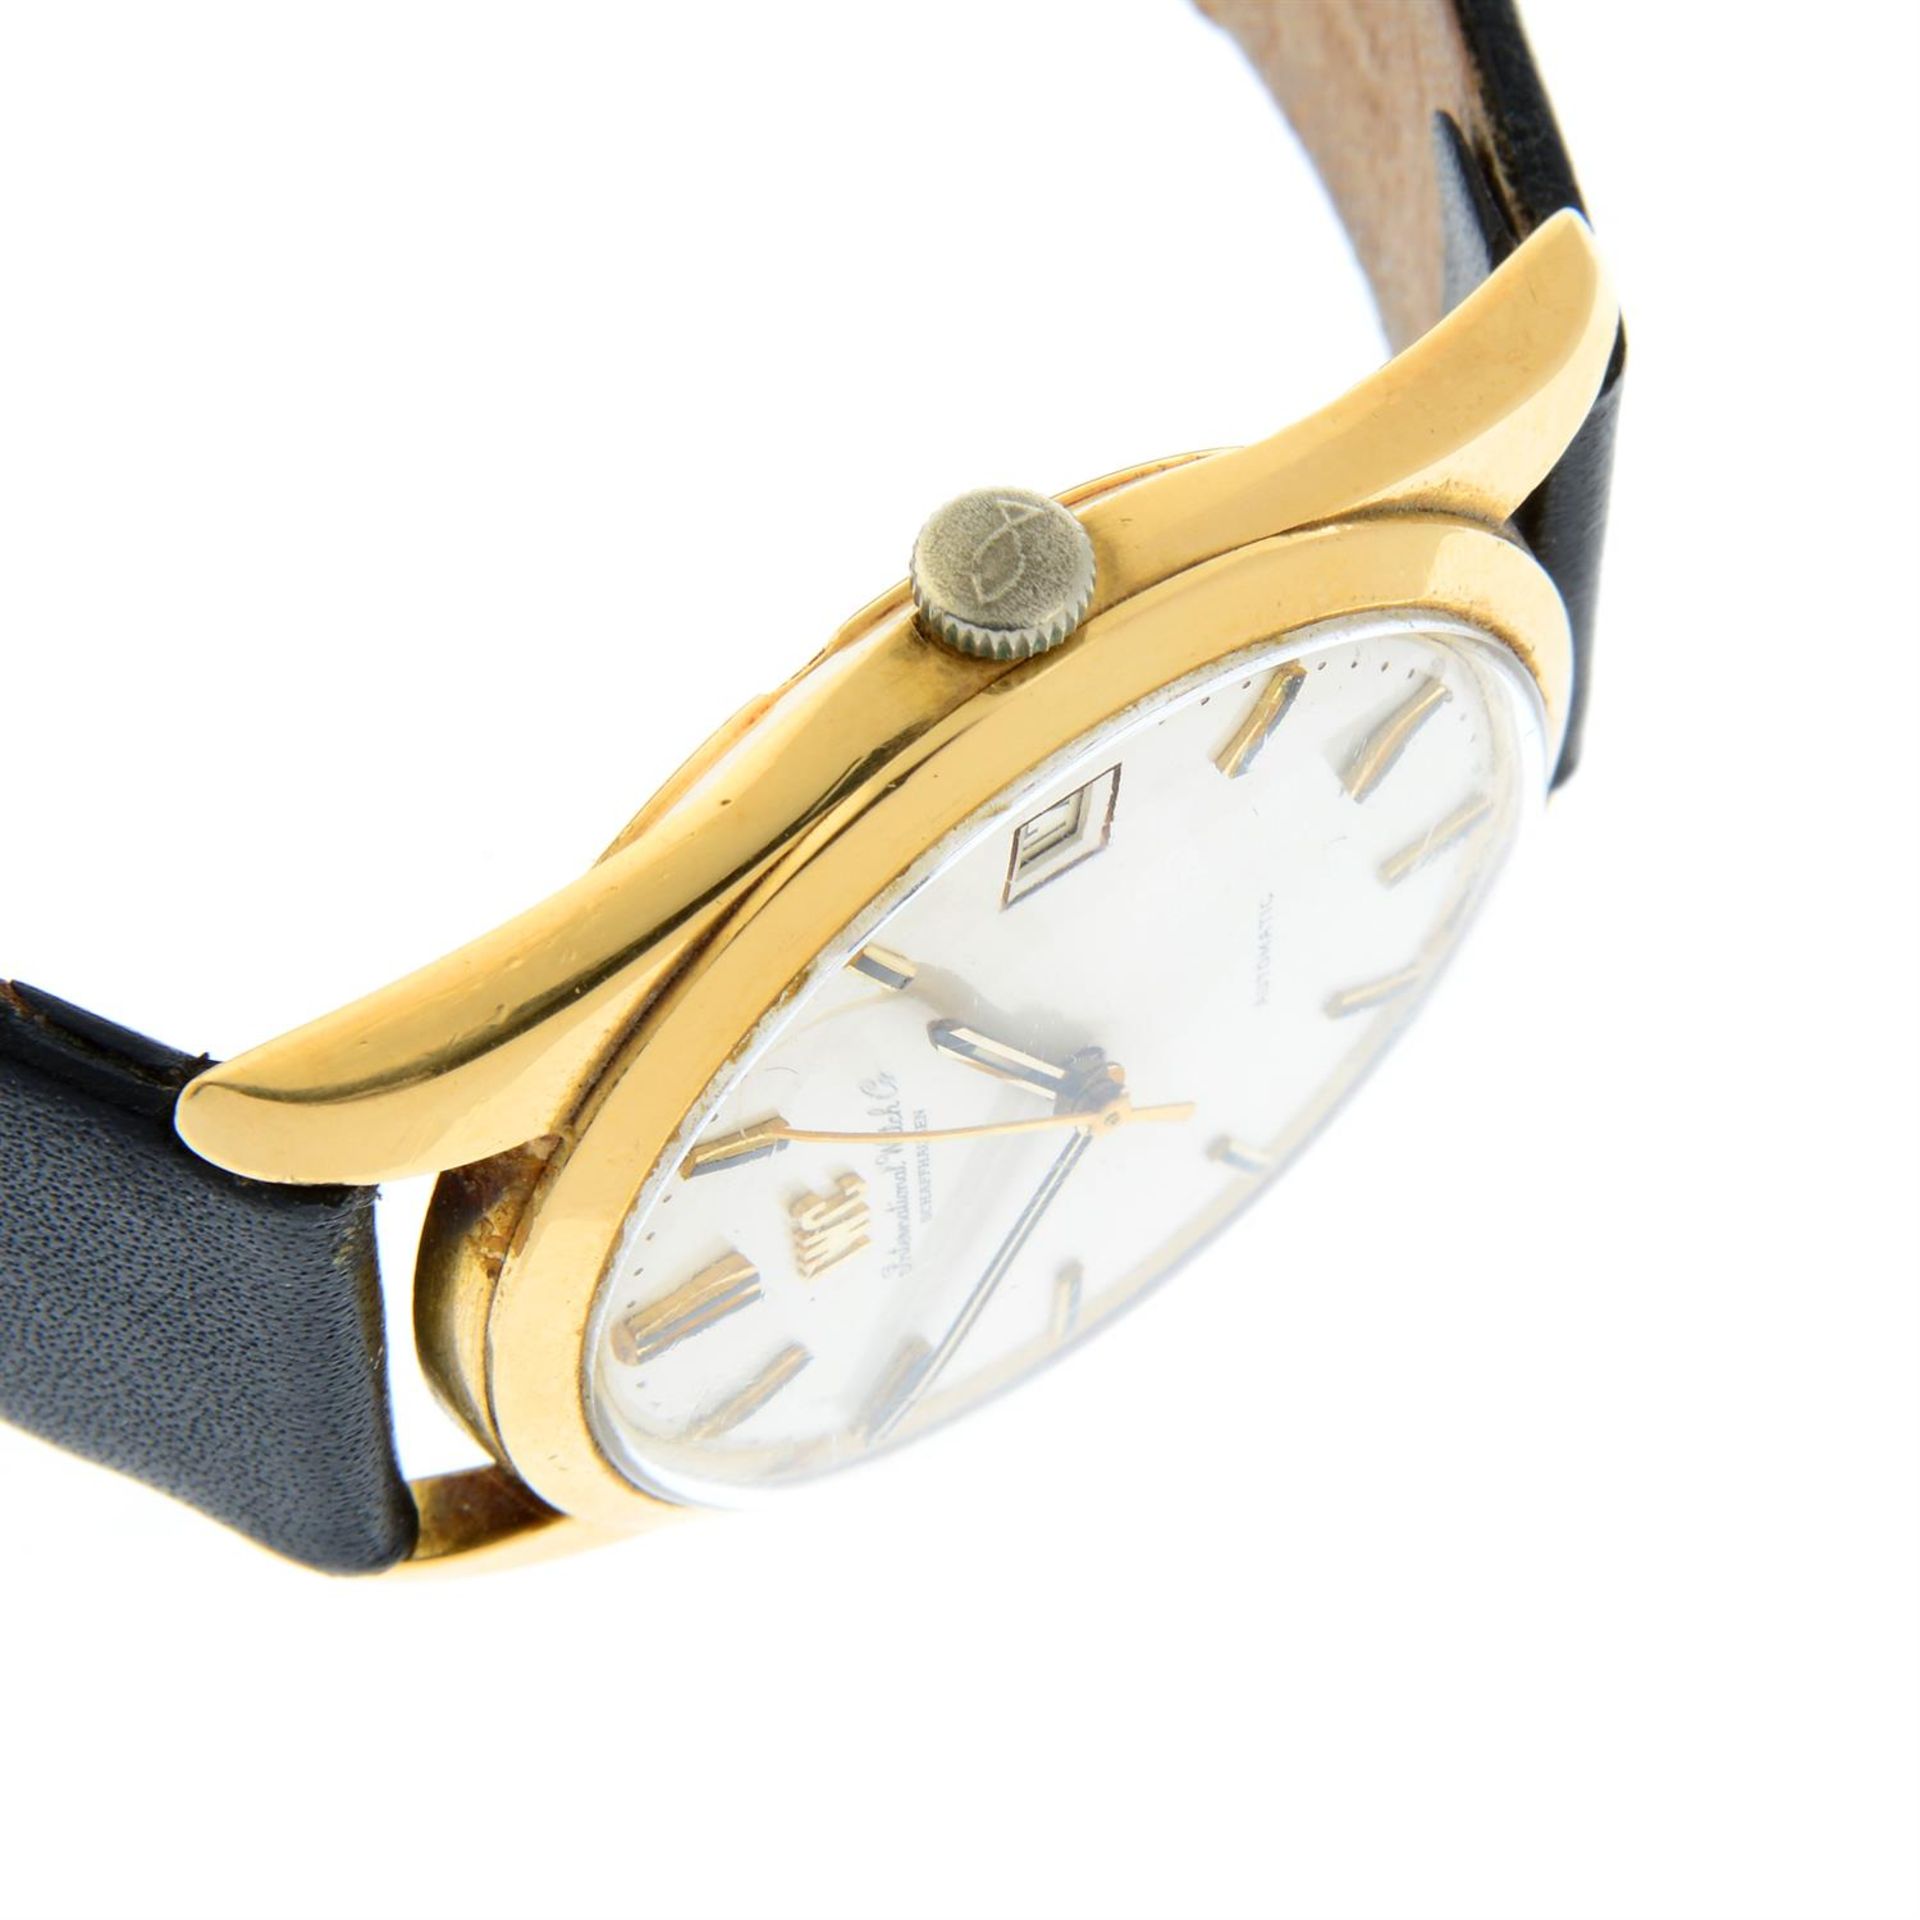 IWC - a yellow metal wrist watch, 36mm. - Image 3 of 5